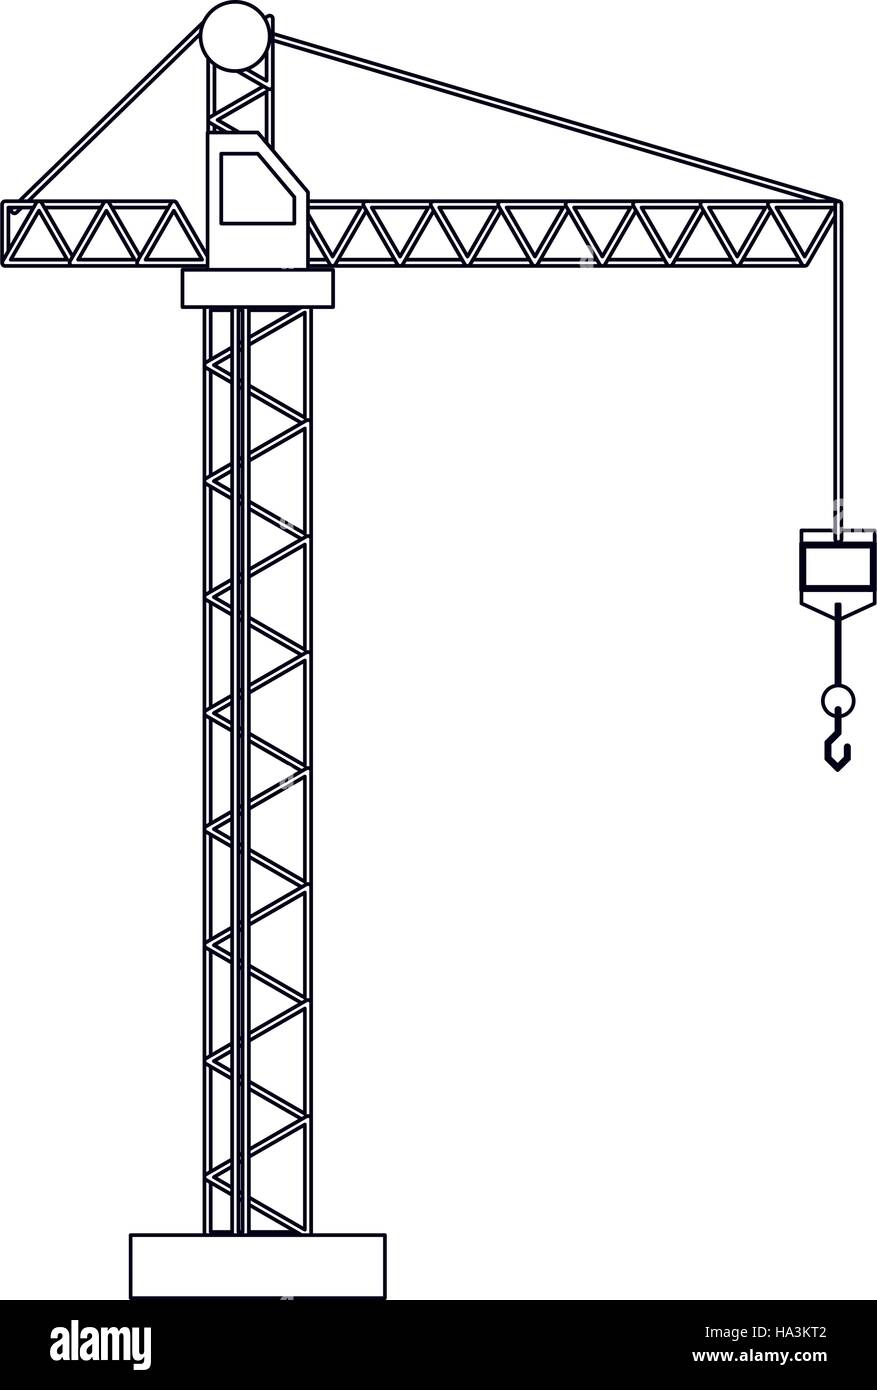 Mobile crane sketch Stock Vector by alekseimakarov 85837012